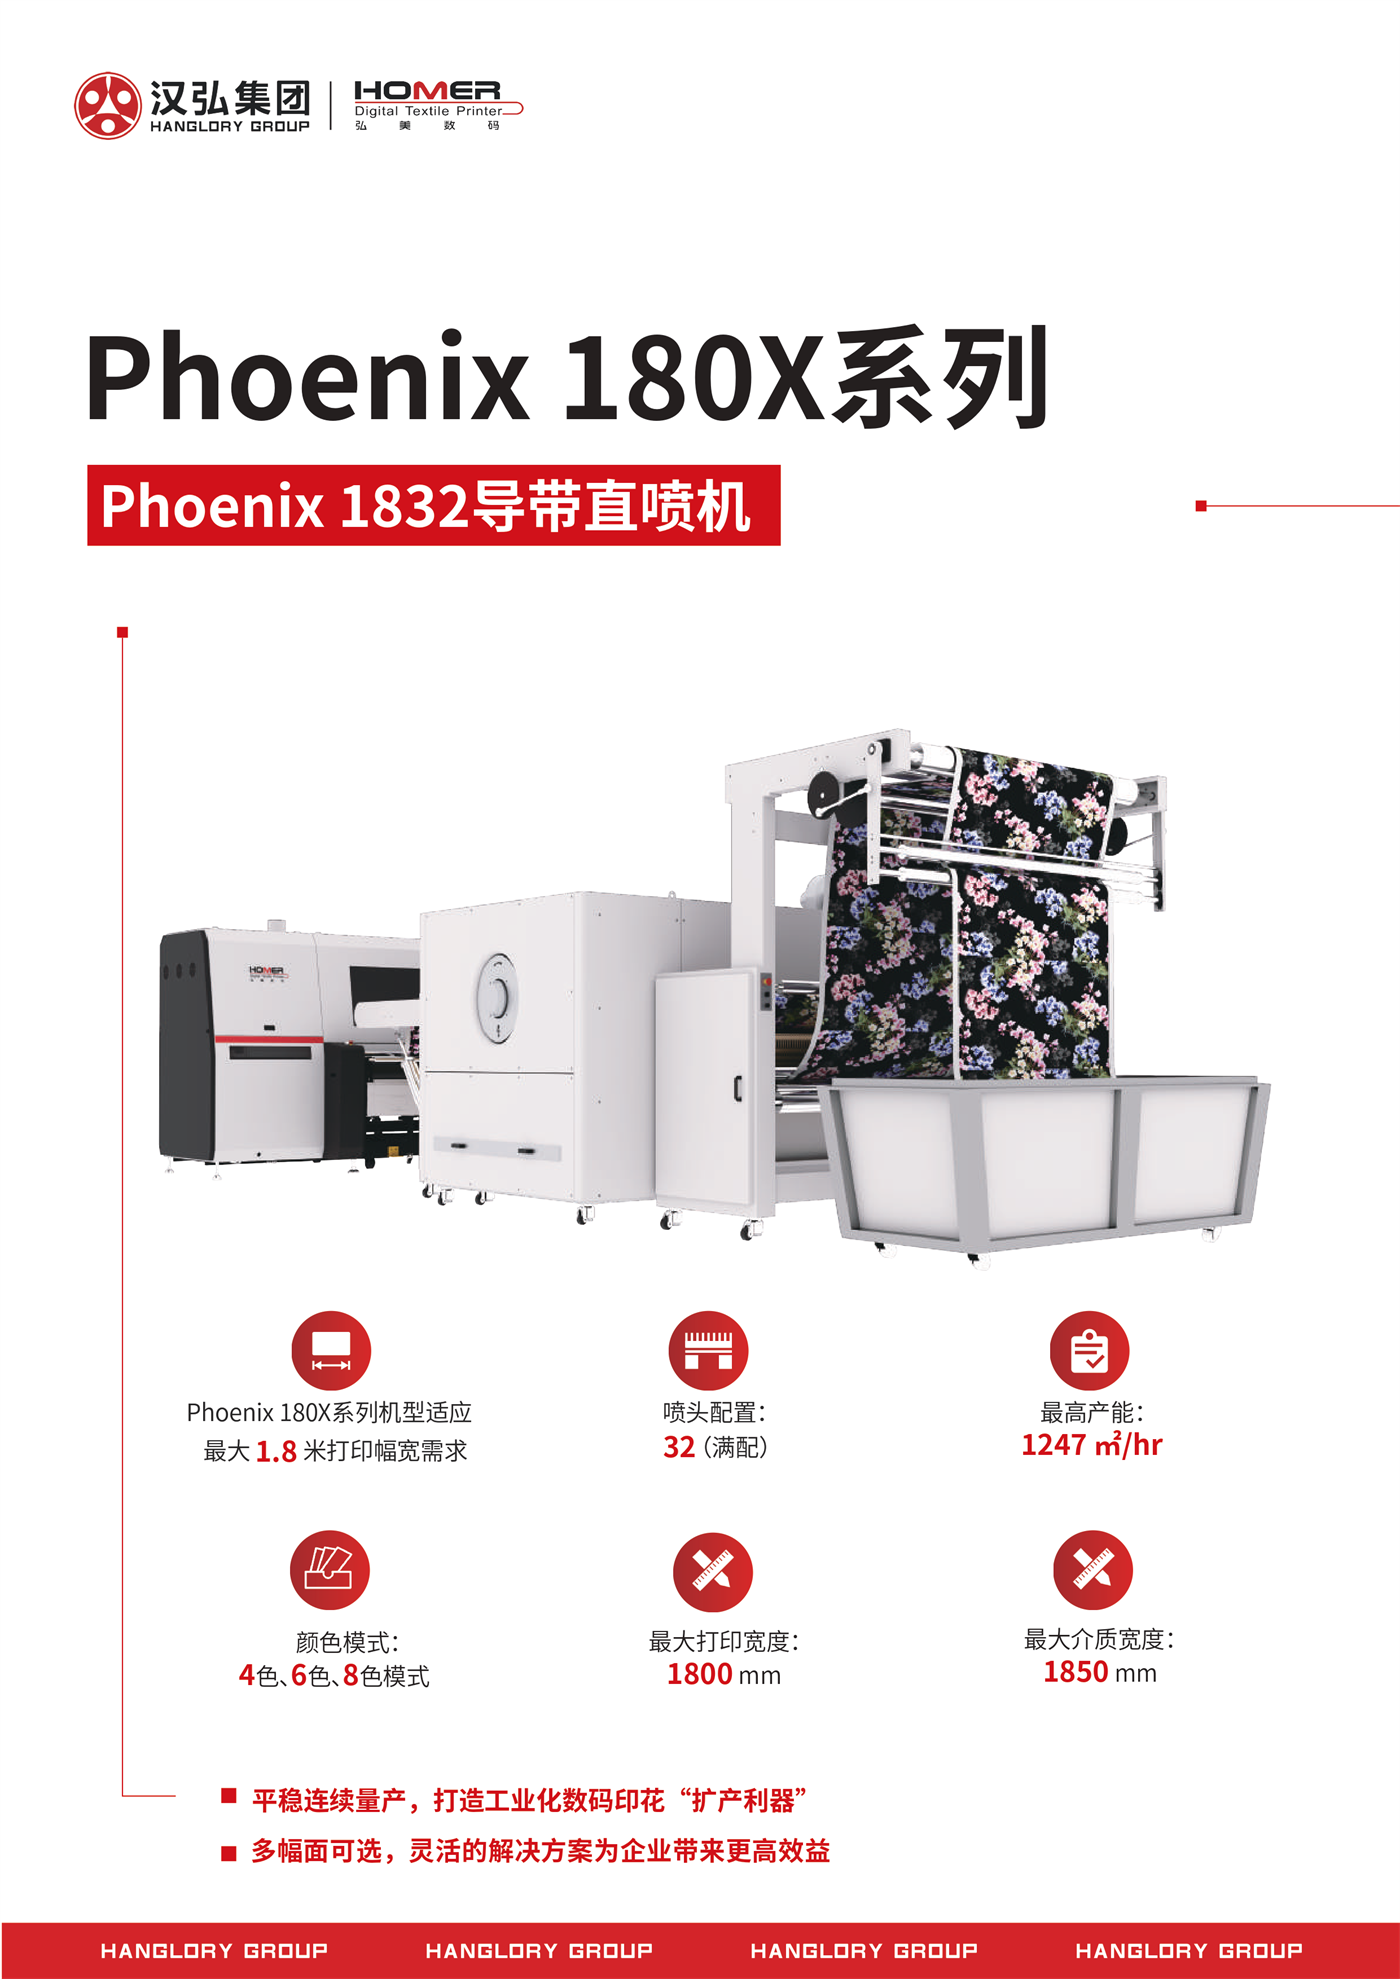 Phoenix 180X (图2)